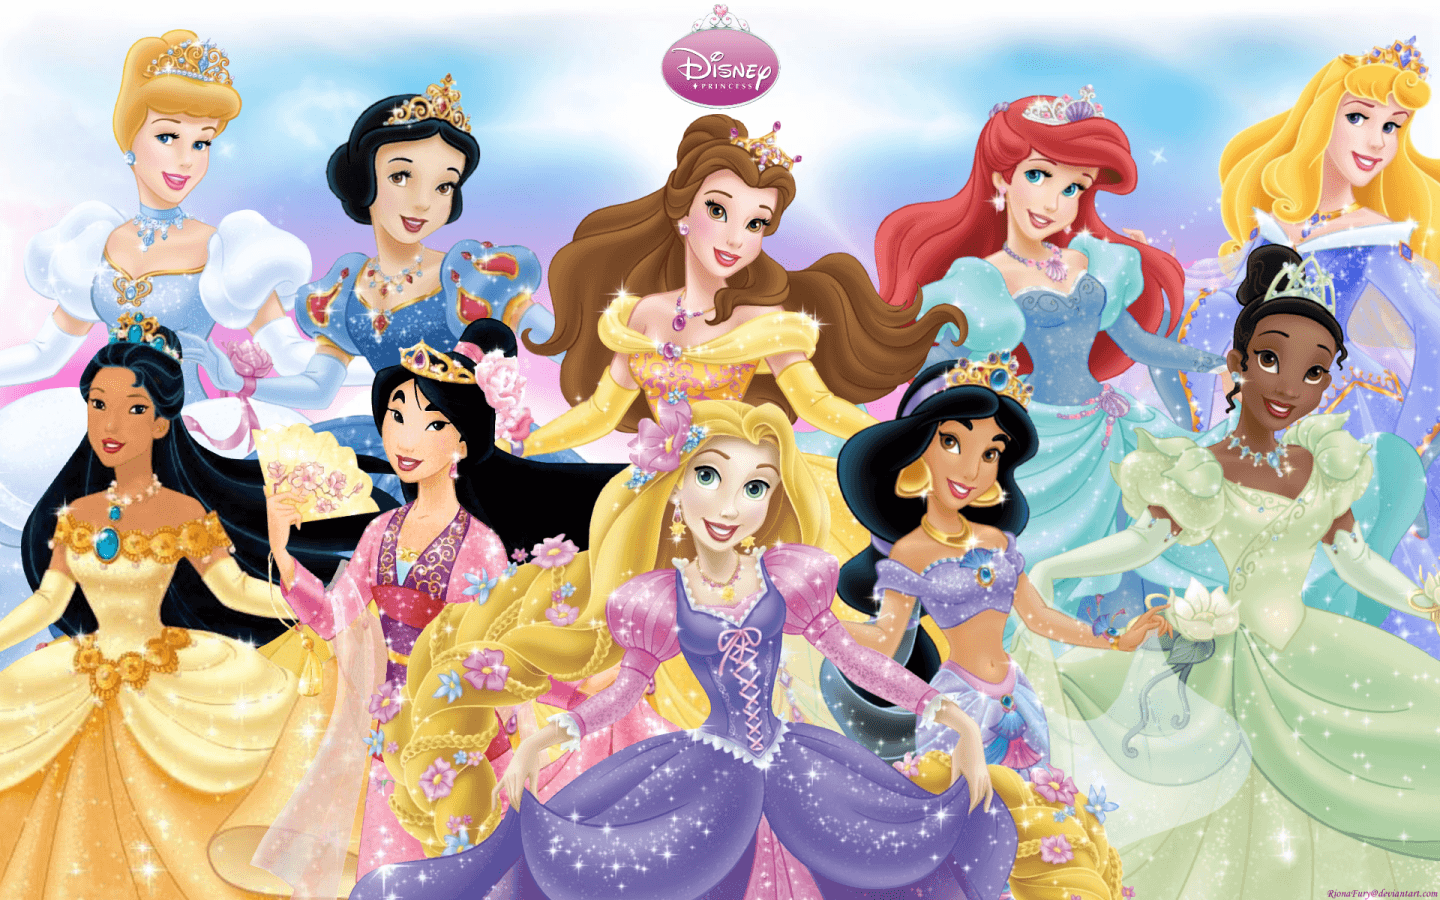 Disney Princess Wallpaper picture, image or photo. Princess